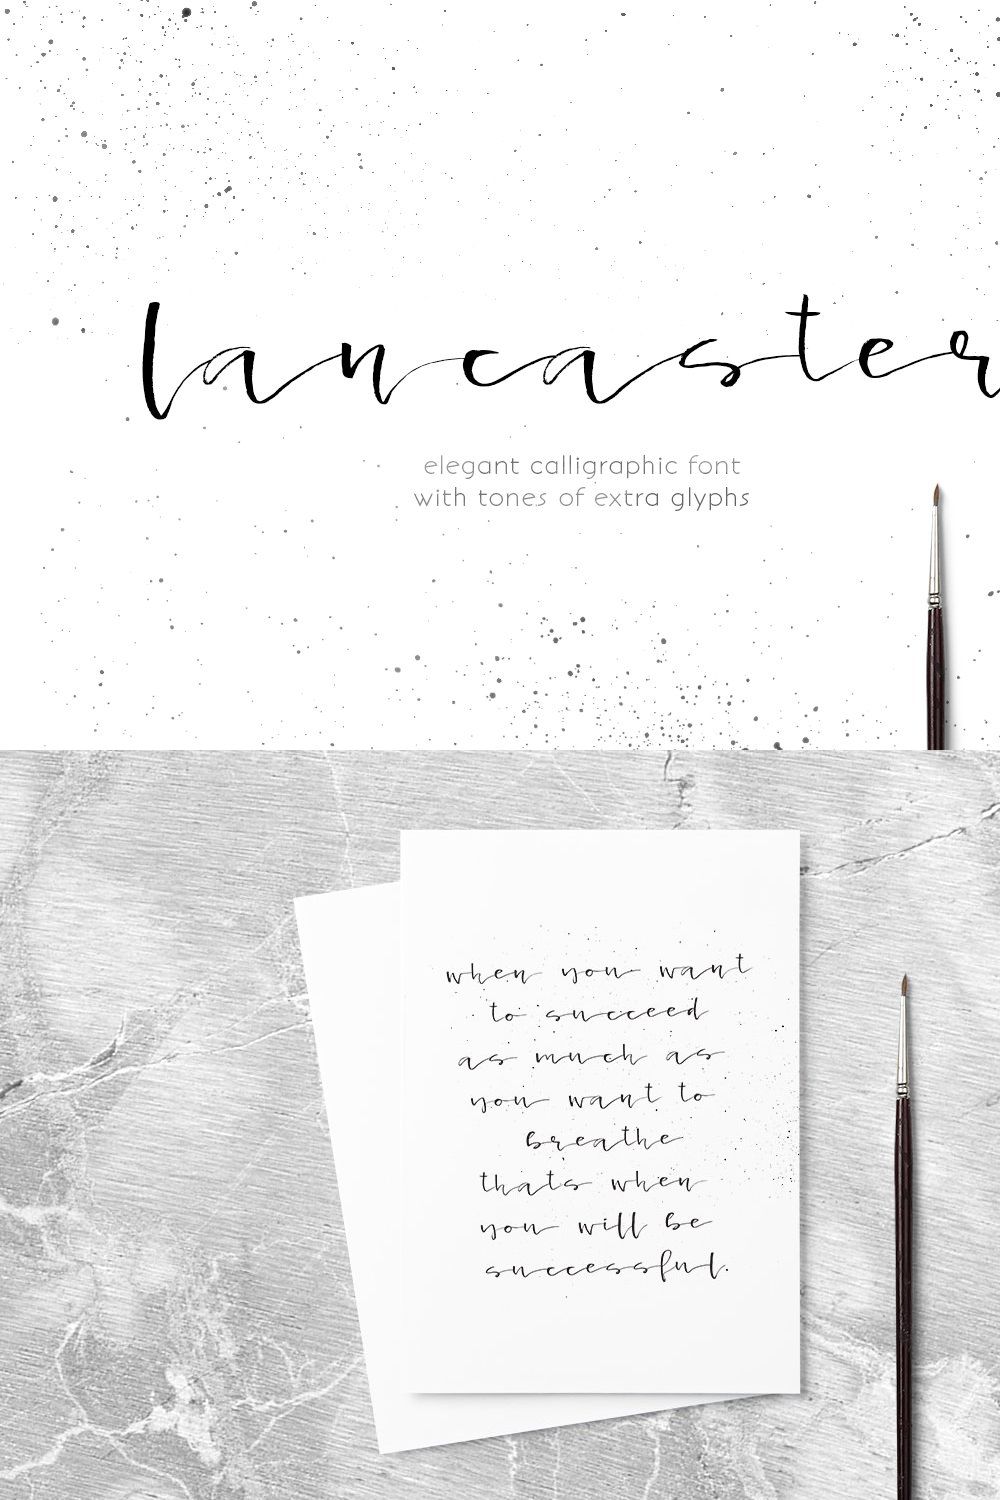 Lancaster - calligraphic font pinterest preview image.